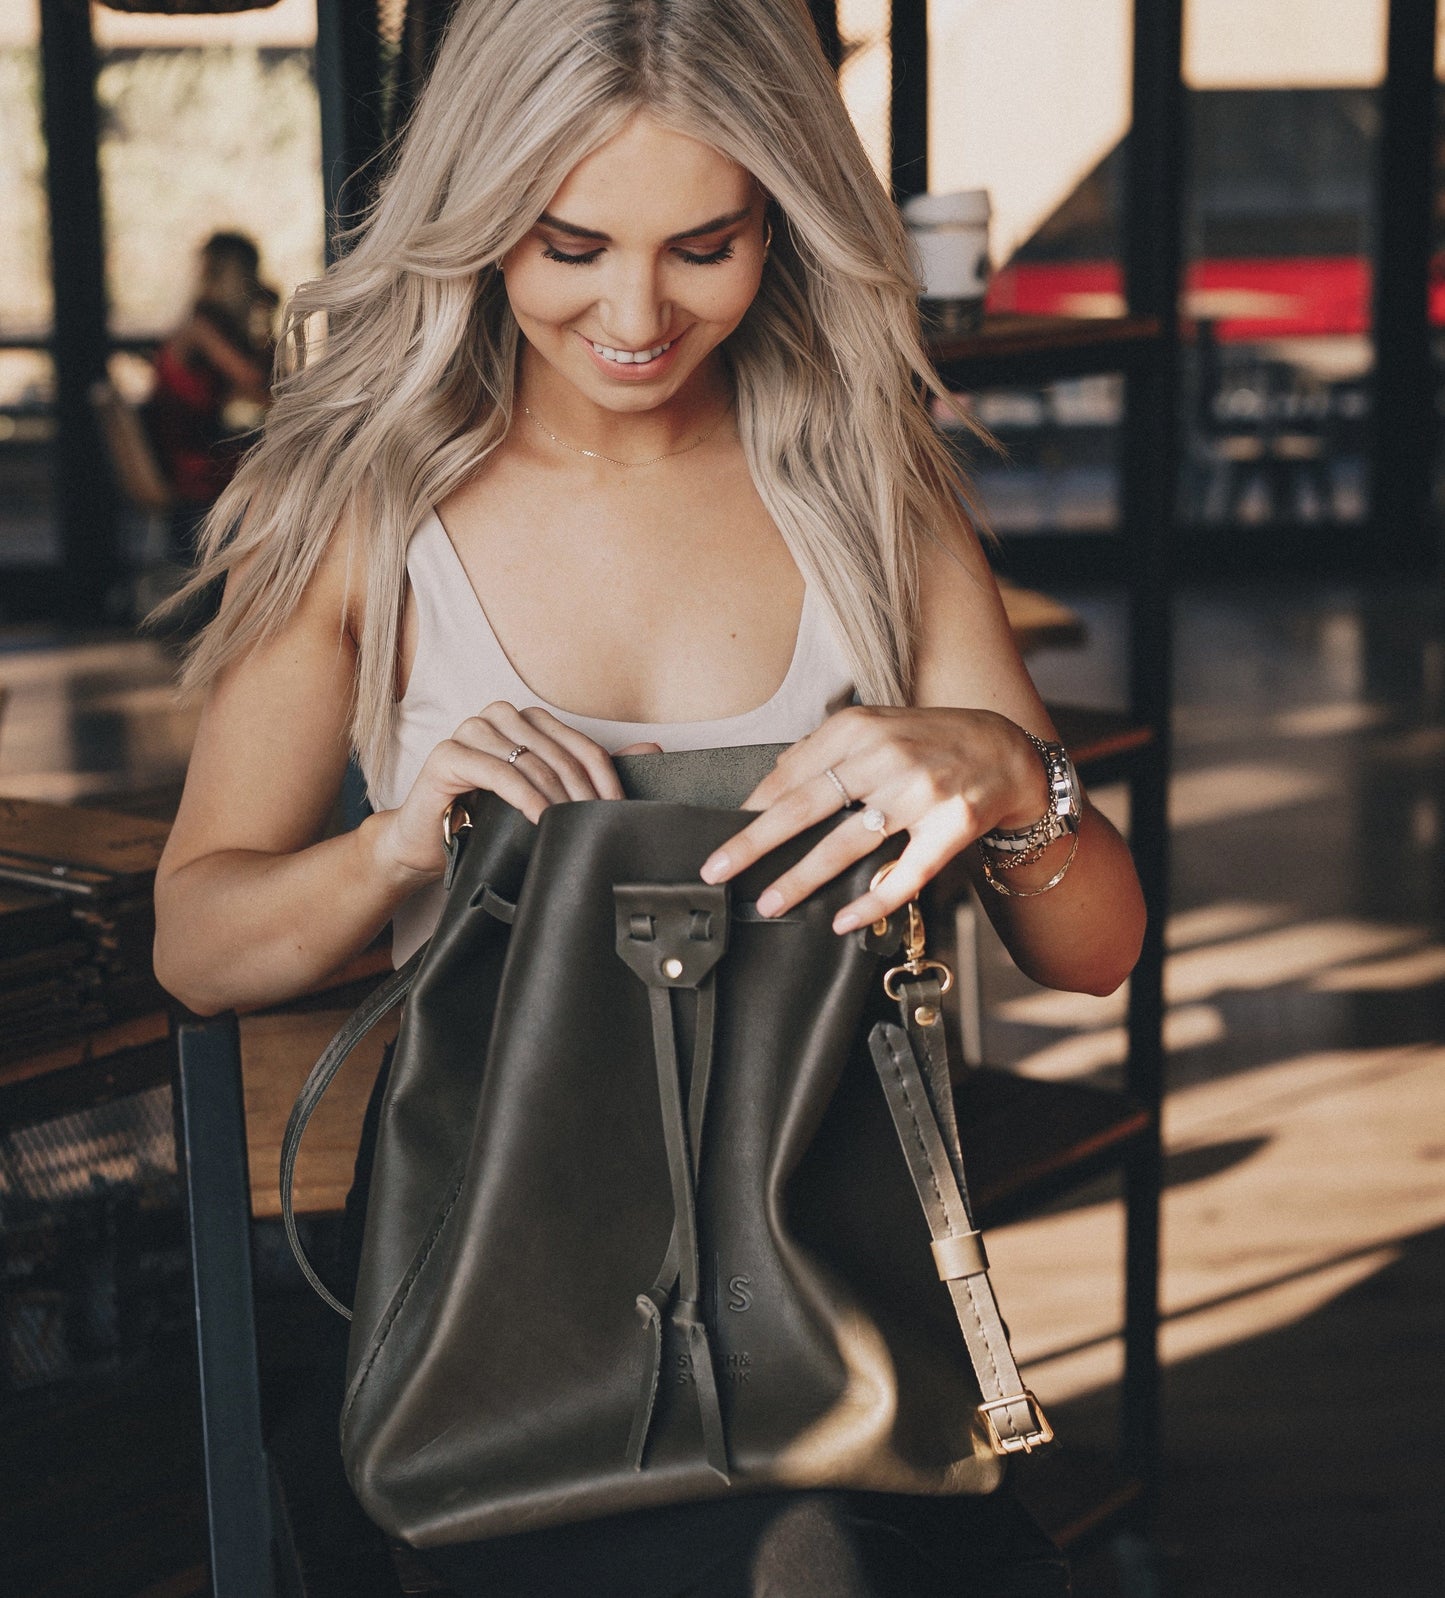 Genuine leather handbag South Africa